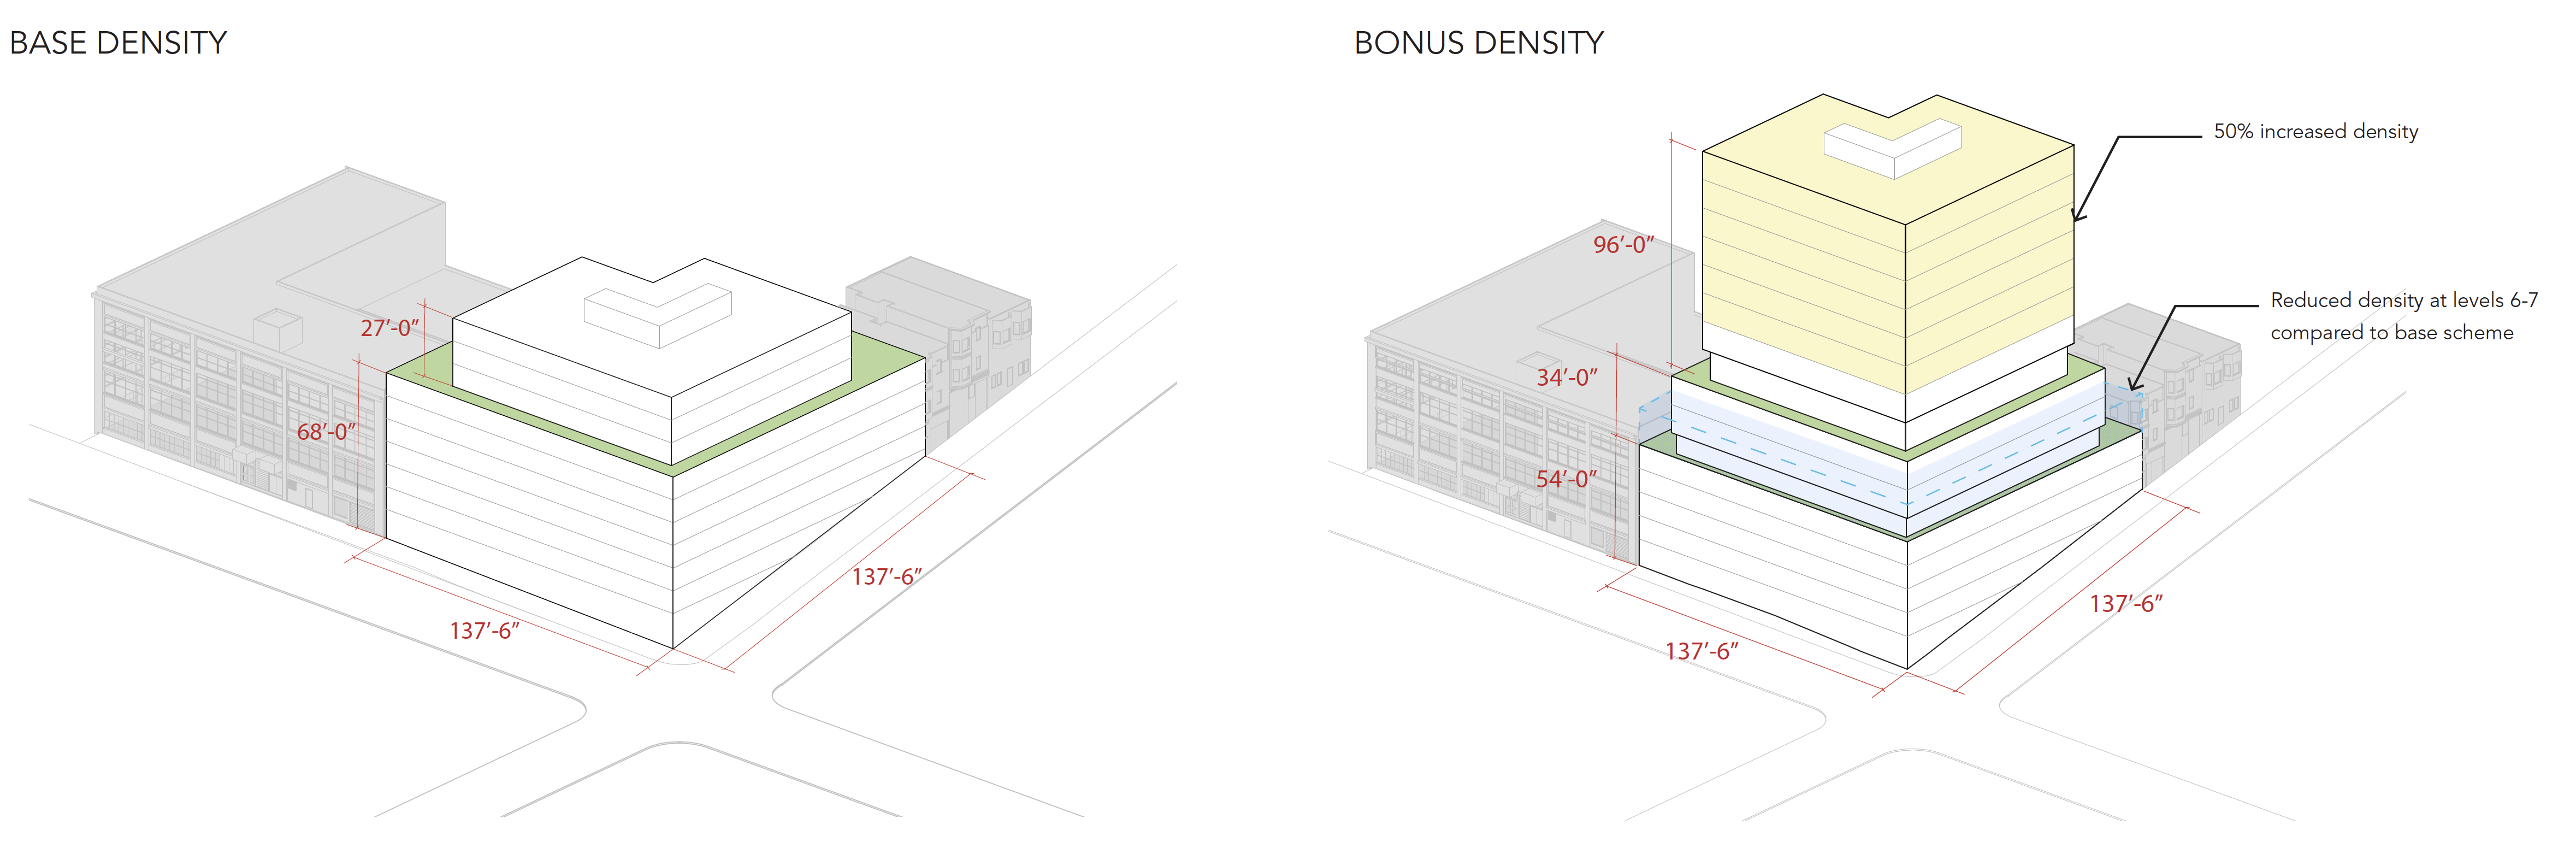 955 Sansome Street base density versus bonus density massing, rendering by Handel Architects